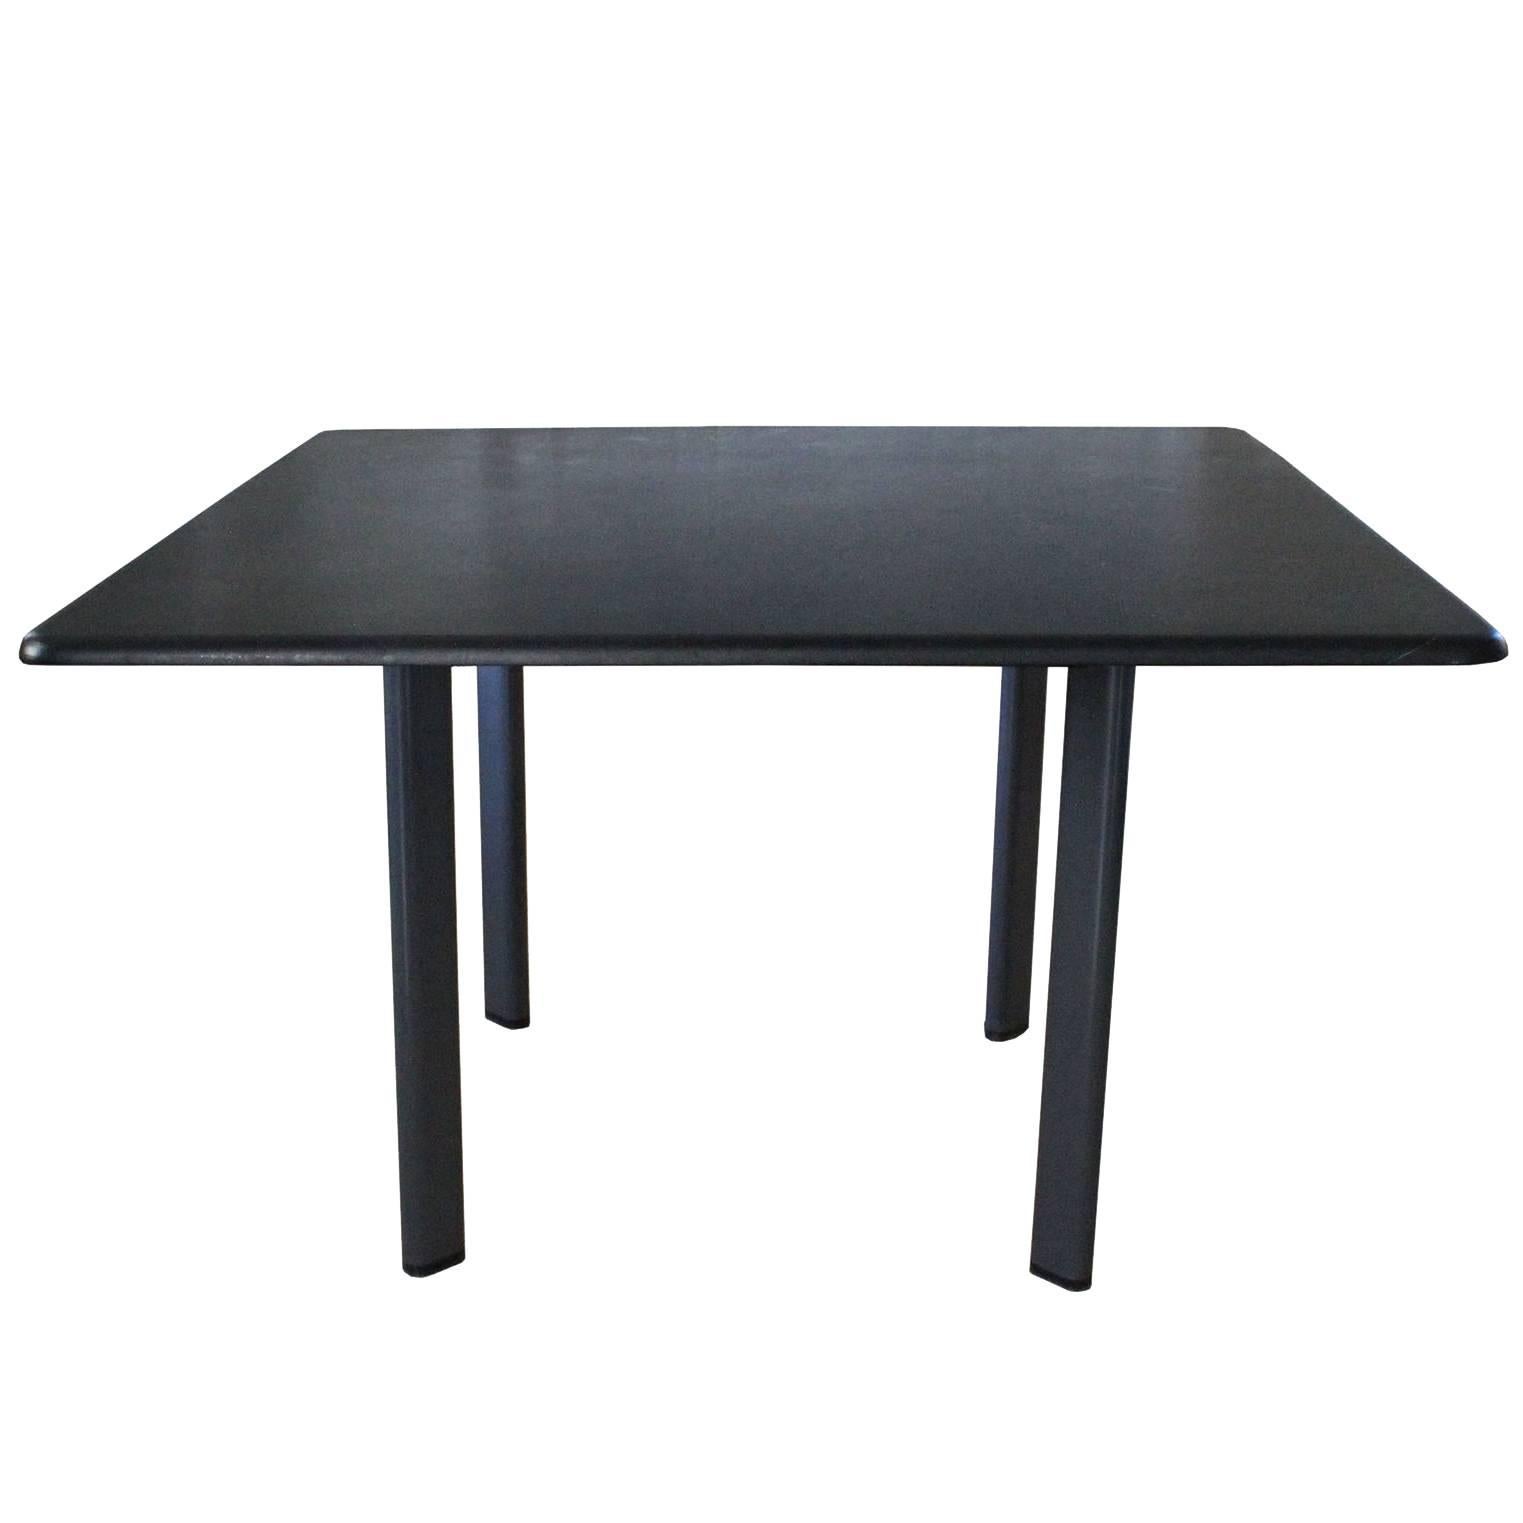 Joe D'Urso Granite Table For Sale